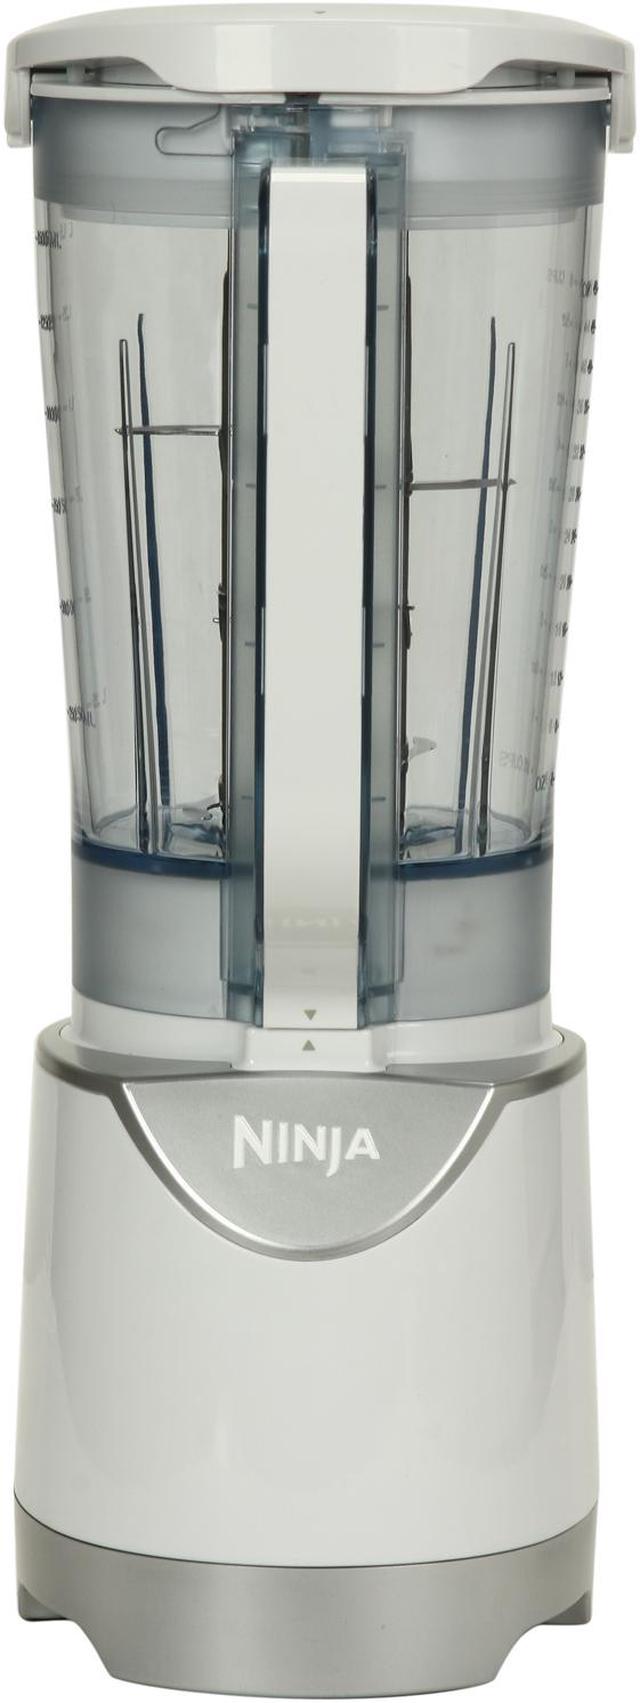 Ninja High Speed Blender Giveaway • Steamy Kitchen Recipes Giveaways